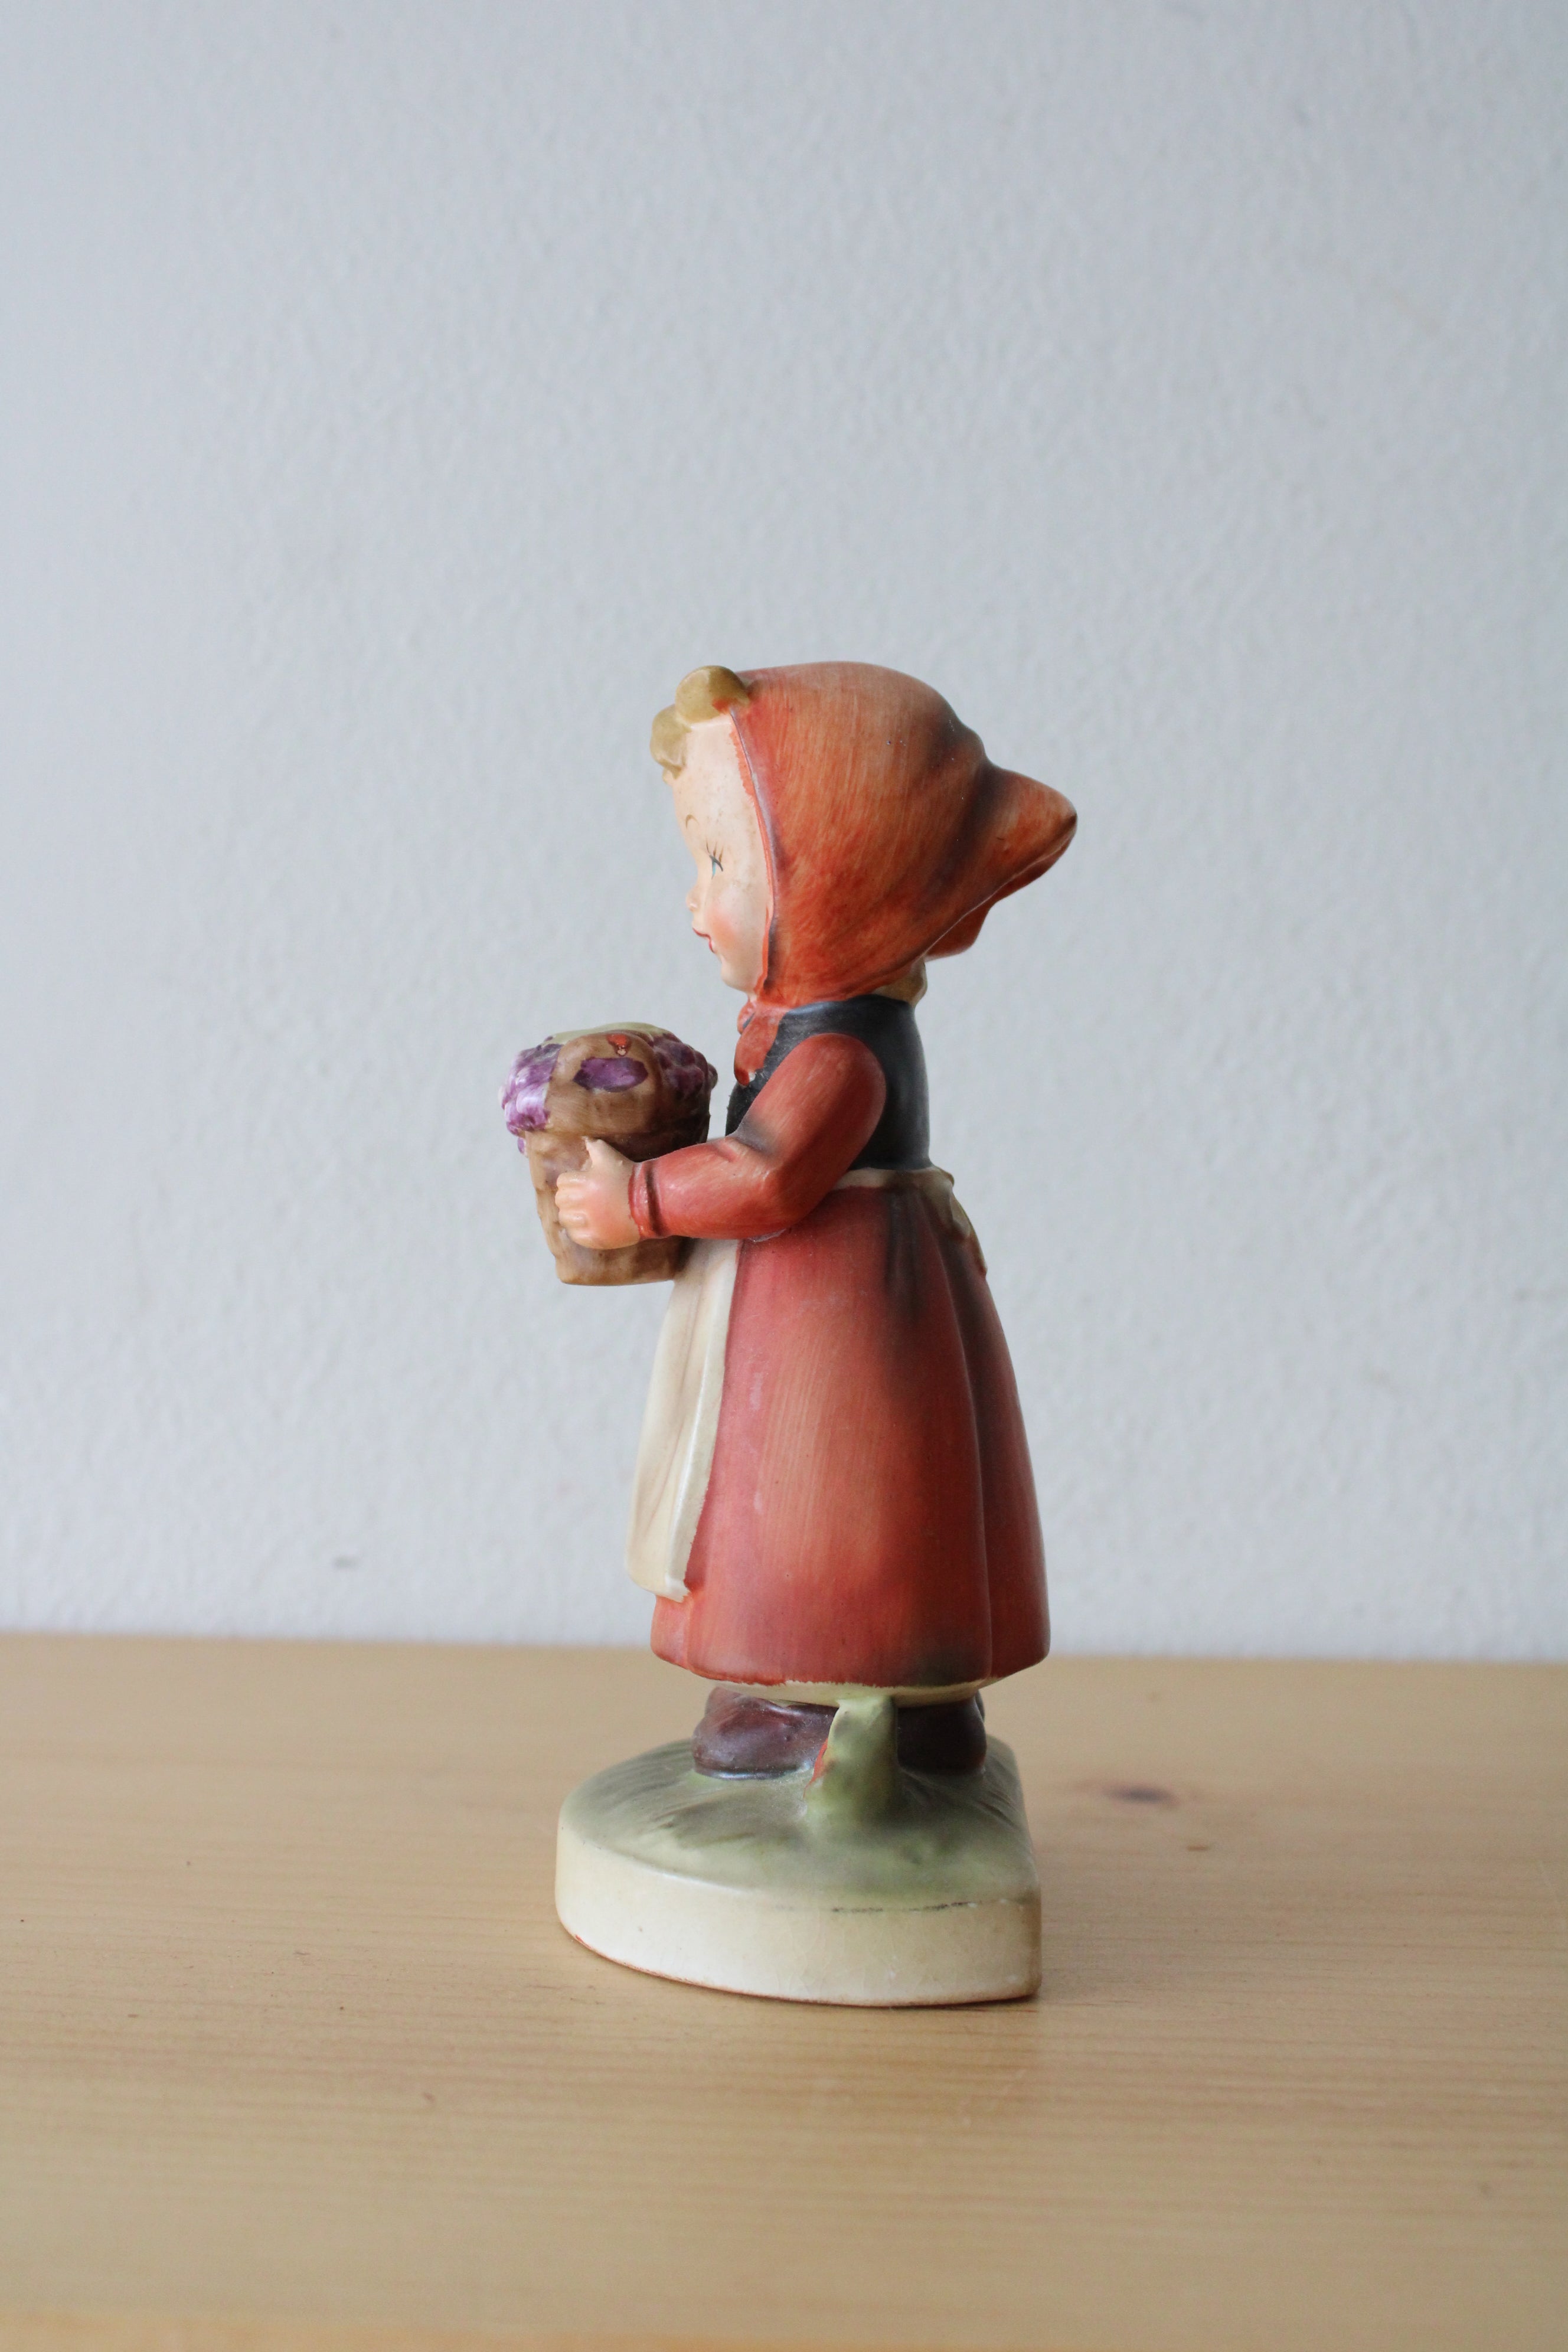 Katayama Porcelain Girl With Grapes Figurine